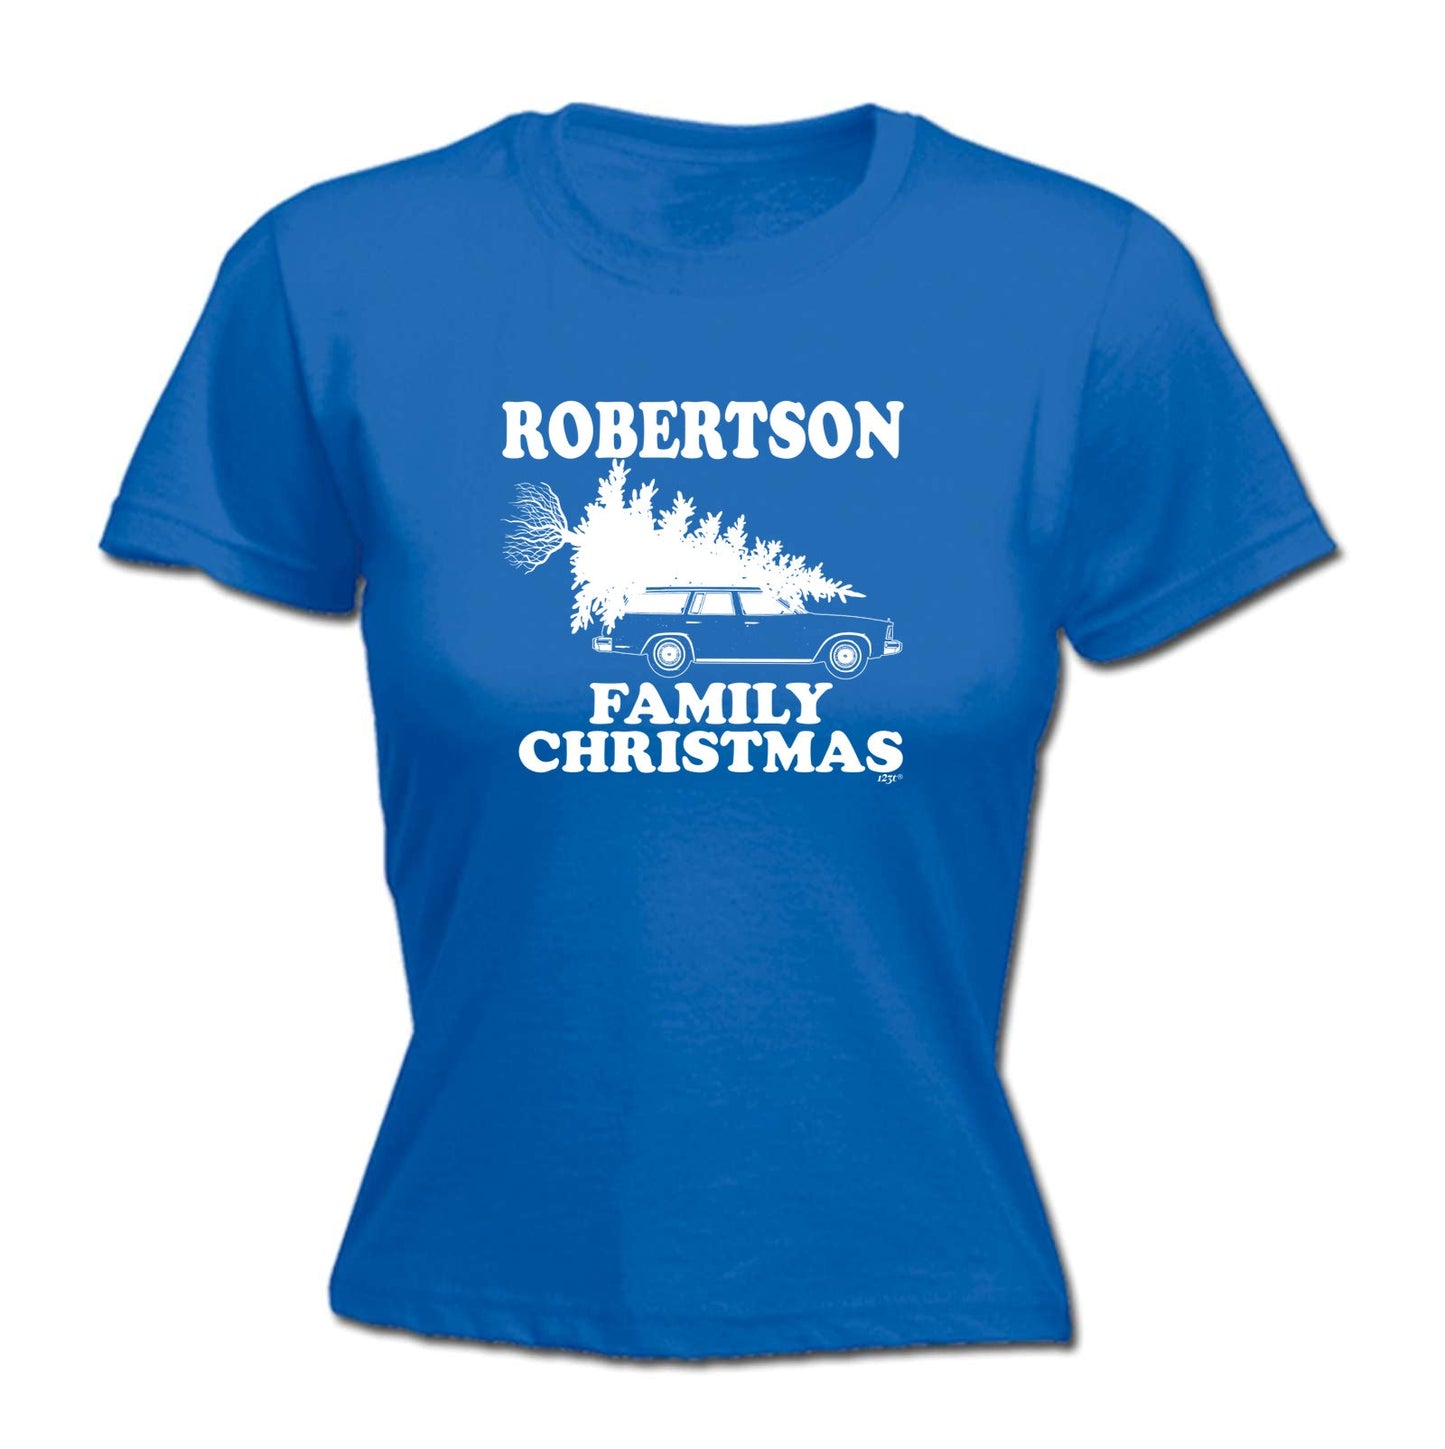 Sailing  Family Christmas Robertson - Xmas Novelty Womens T-Shirt Tshirt